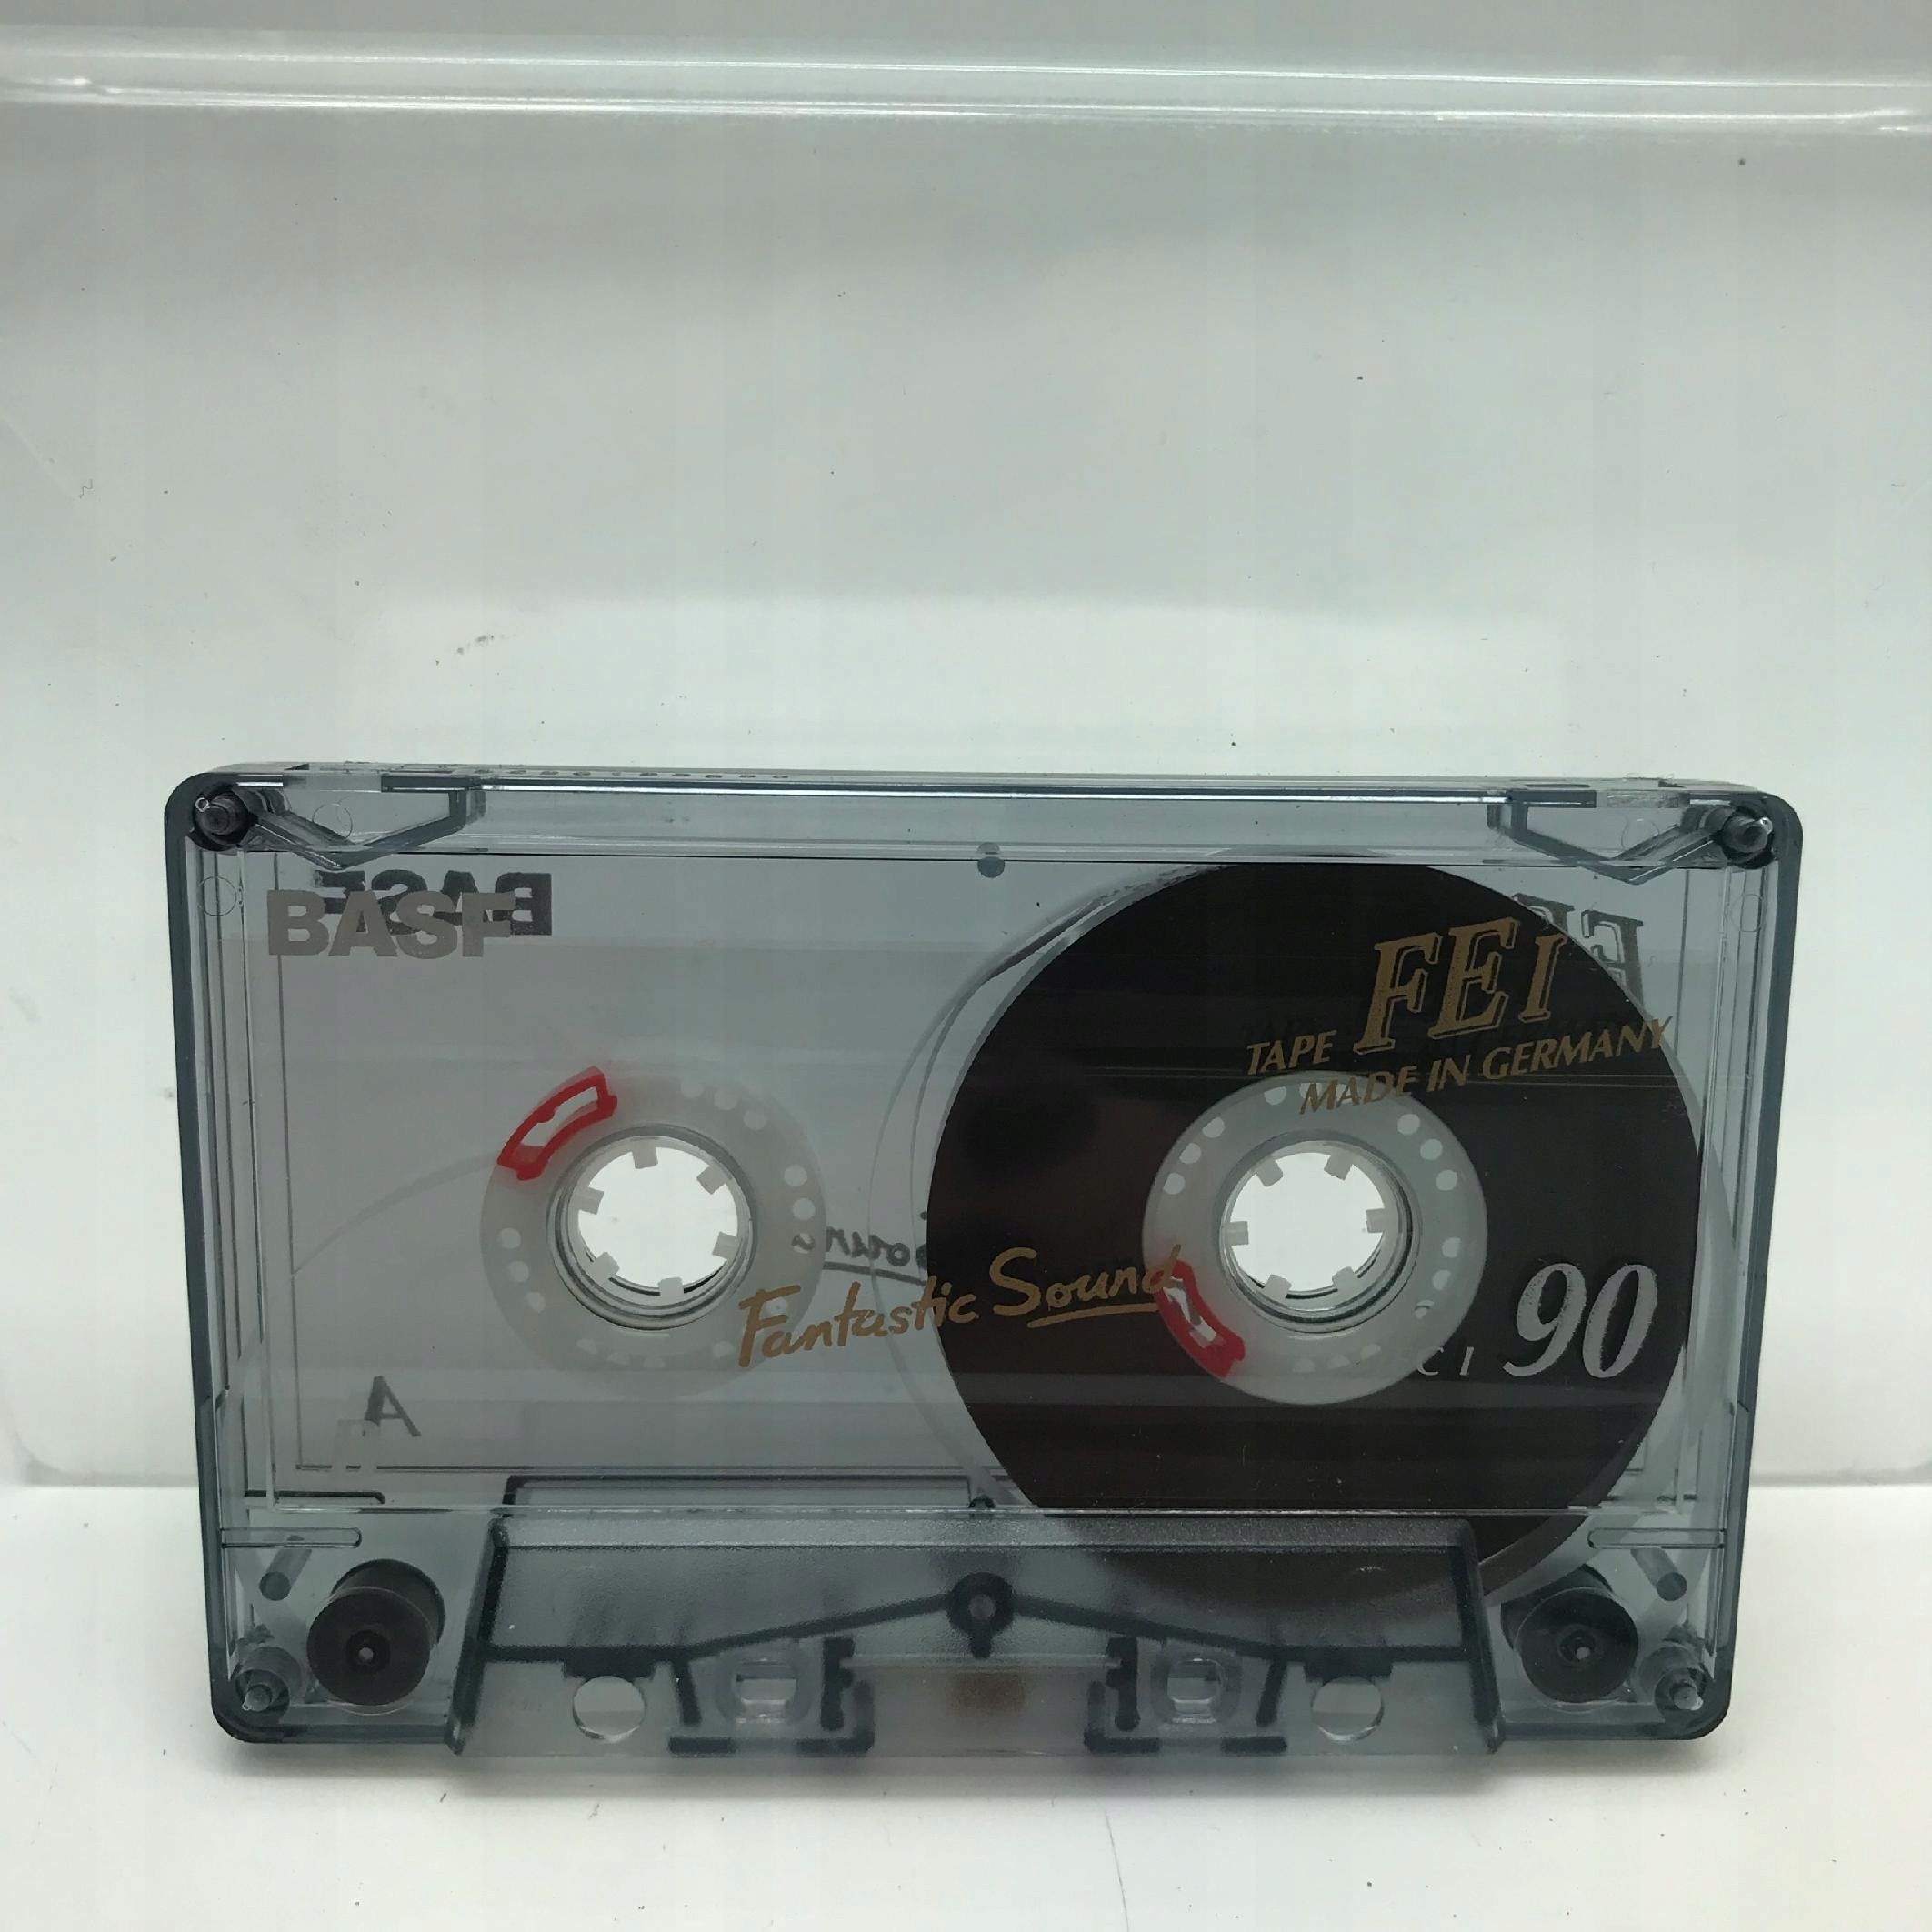 Kaseta - Kaseta magnetofonowa Basf Fe I 90